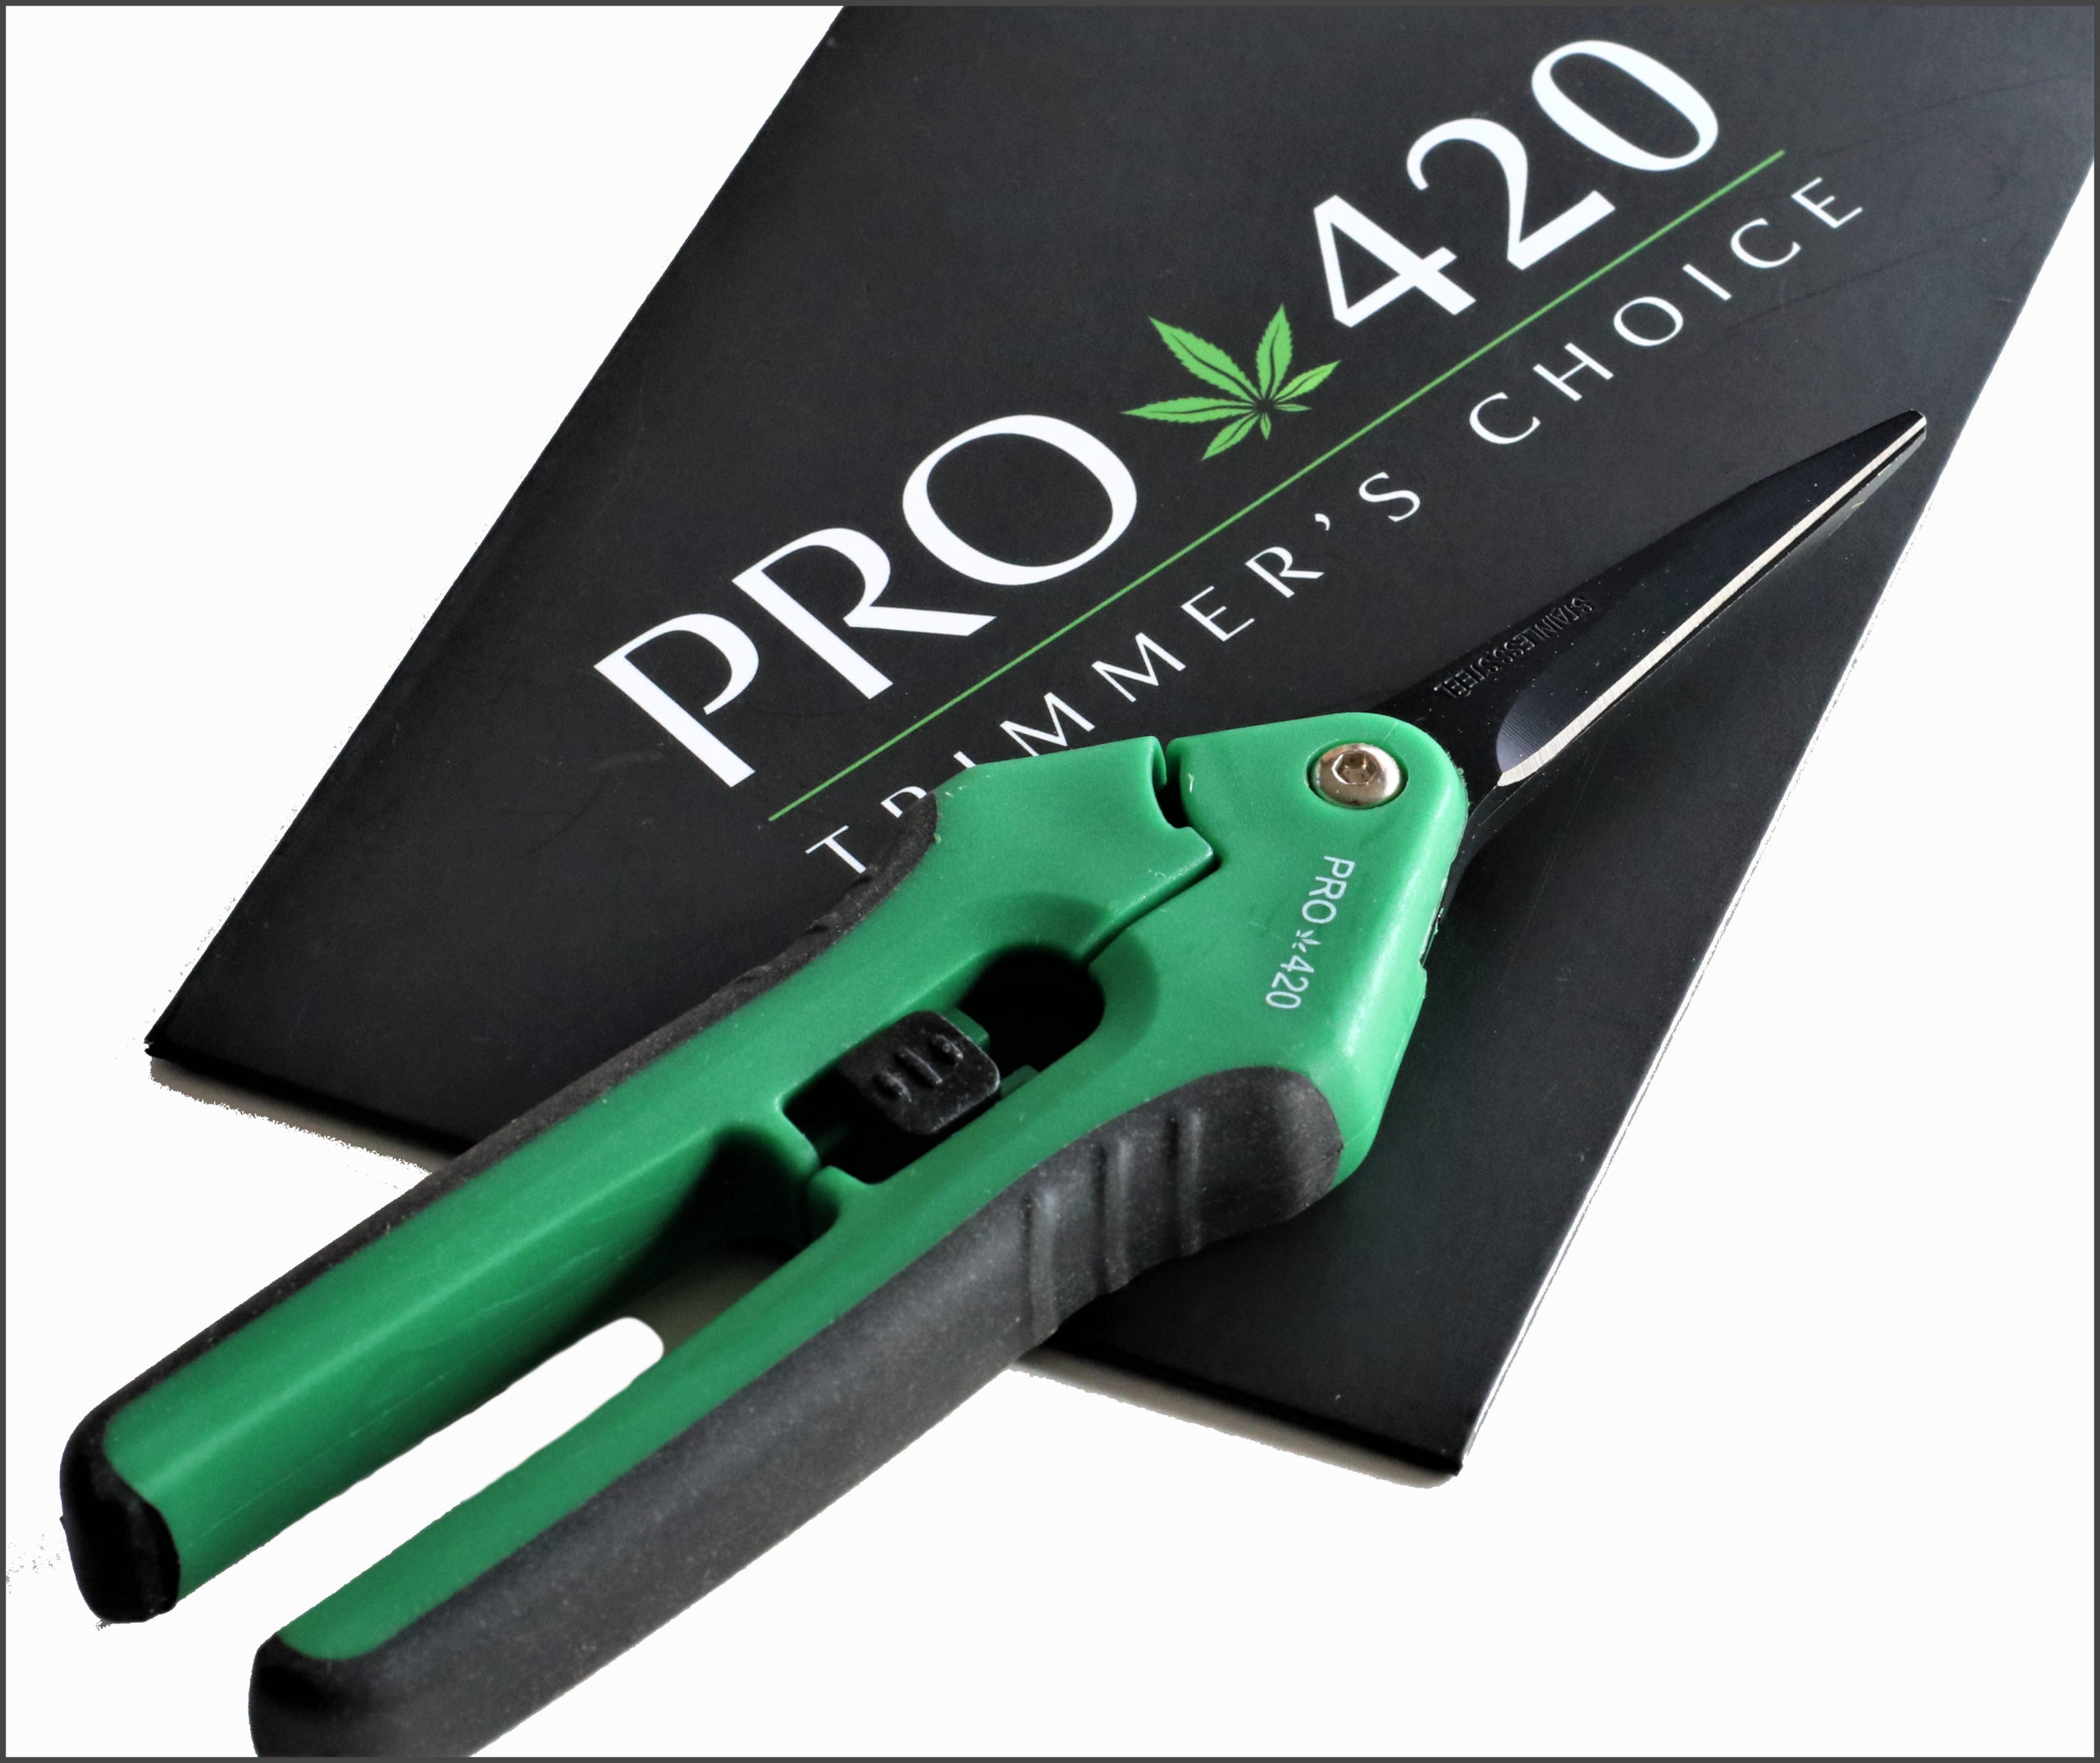 PRO 420 Spring Loaded Scissors PRO 420 Scissors - PRO 420